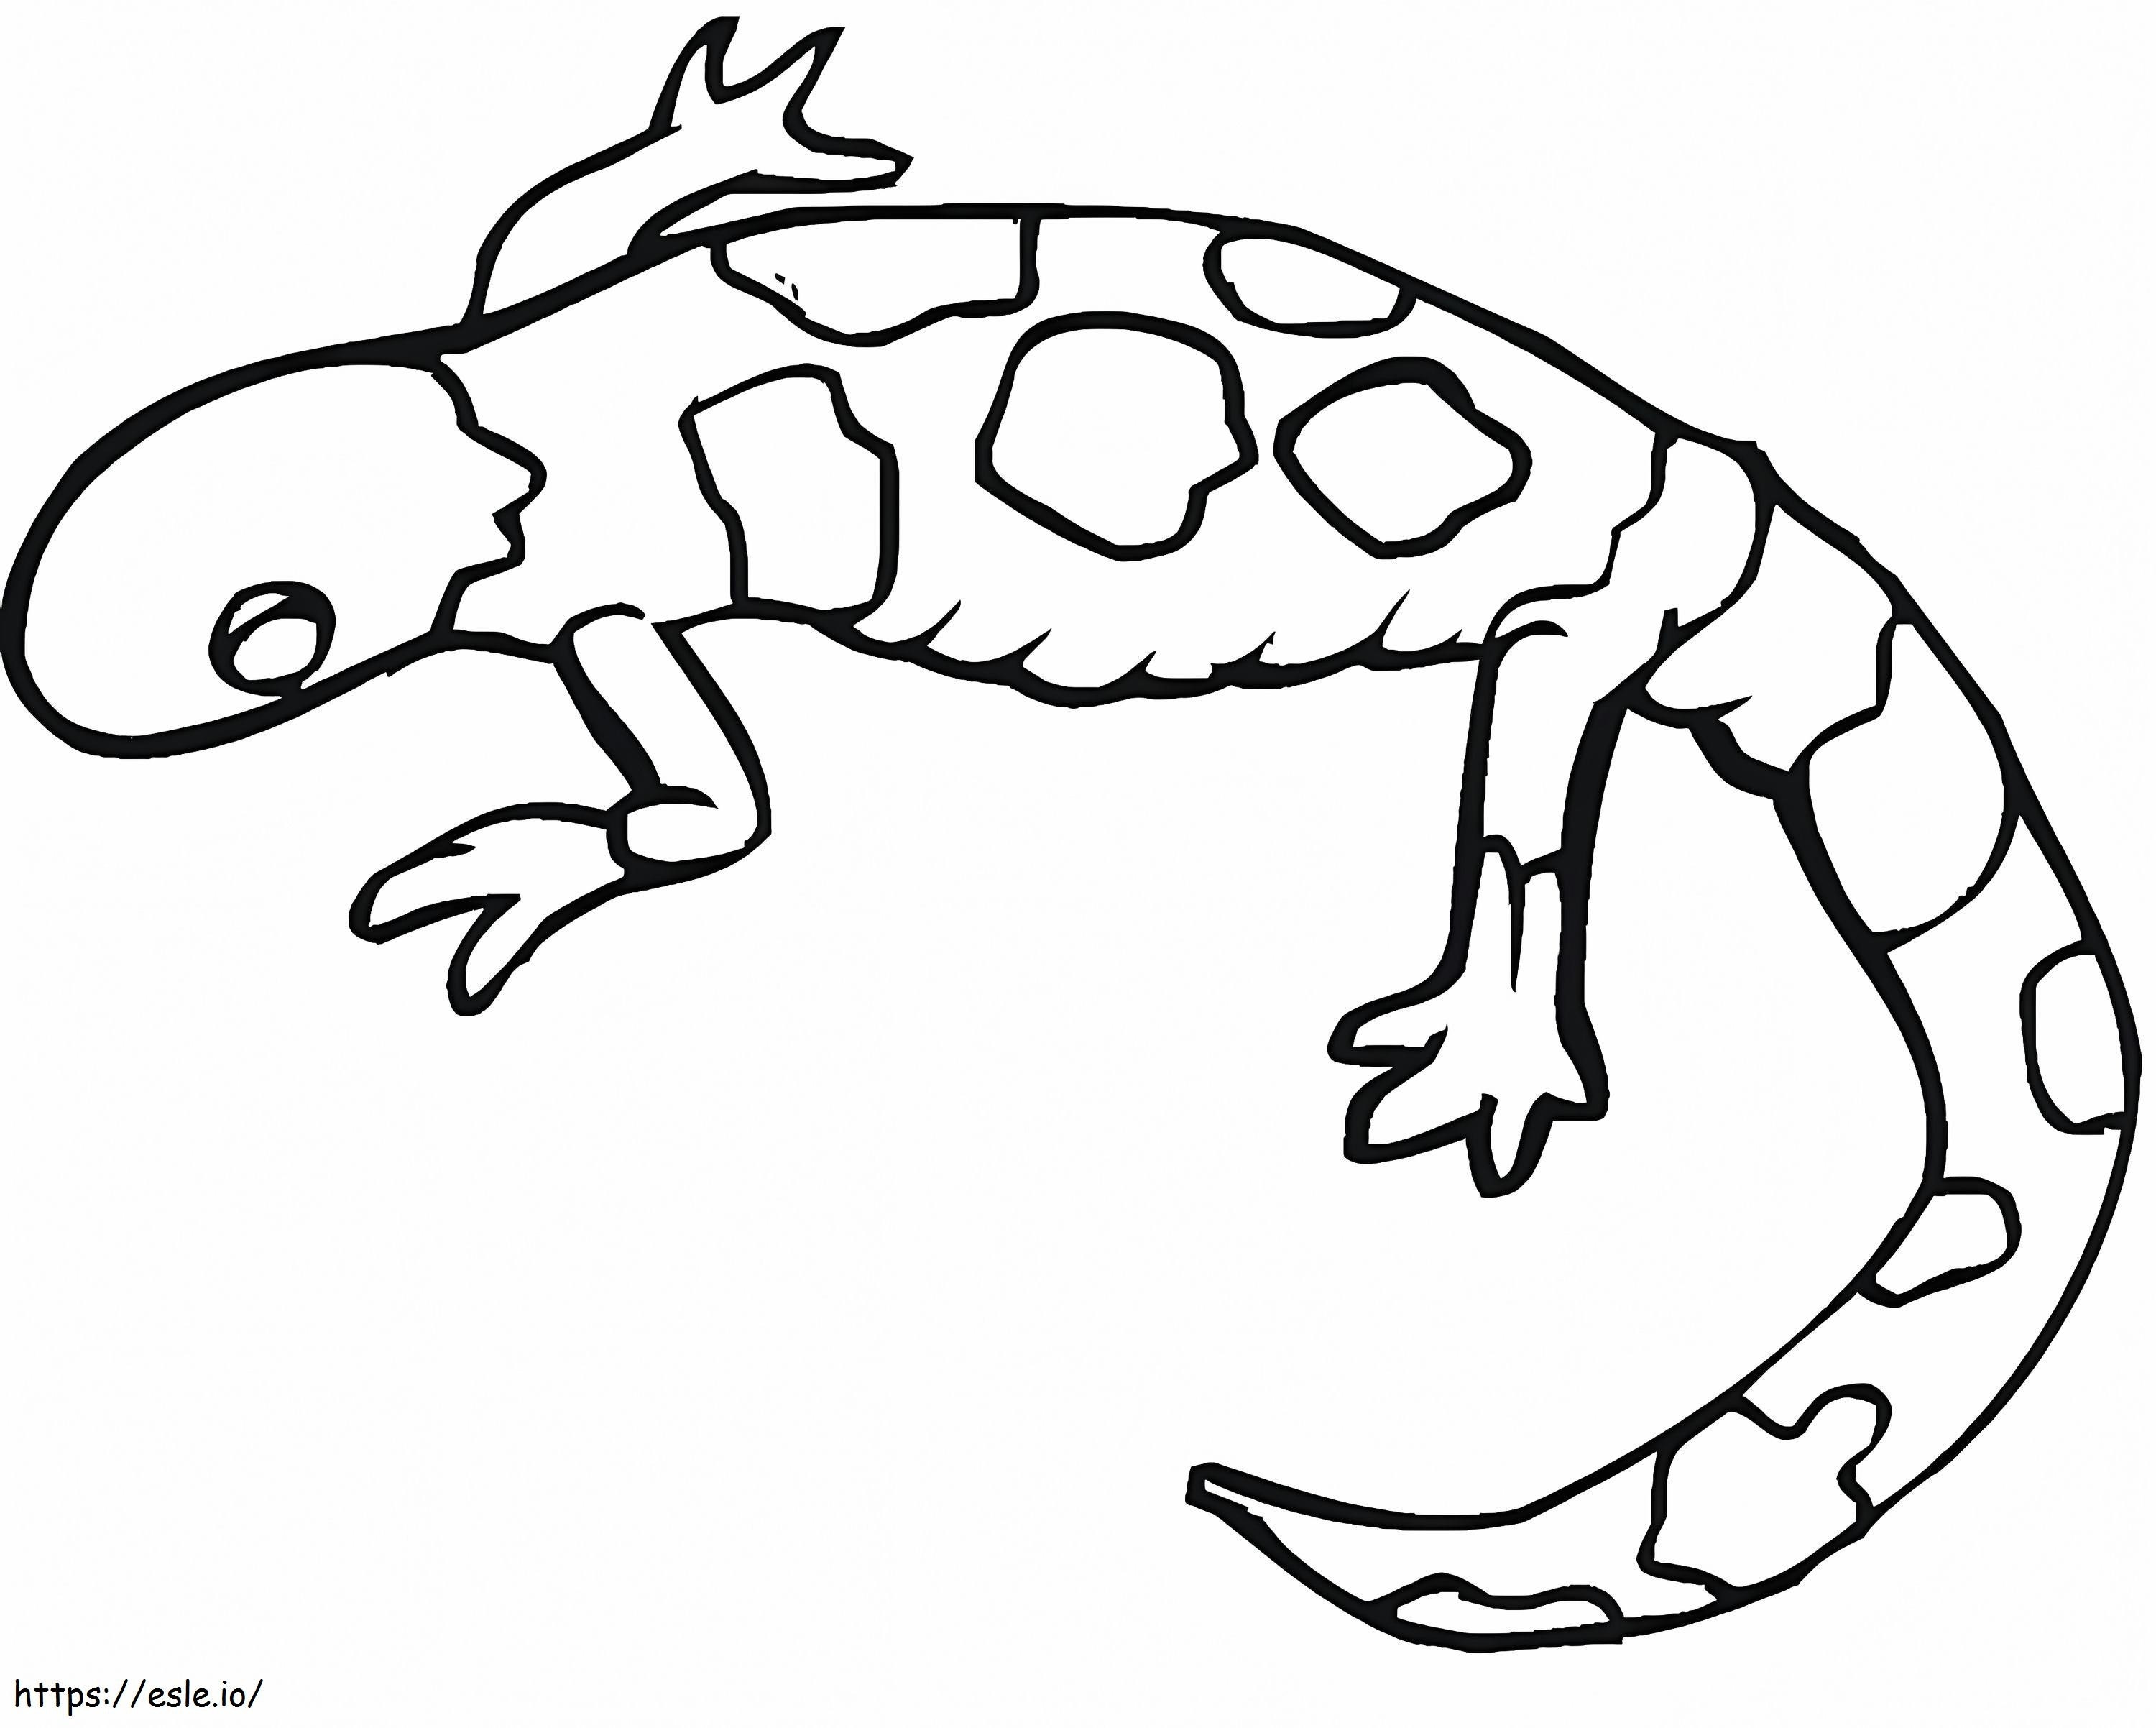 Salamander 7 coloring page